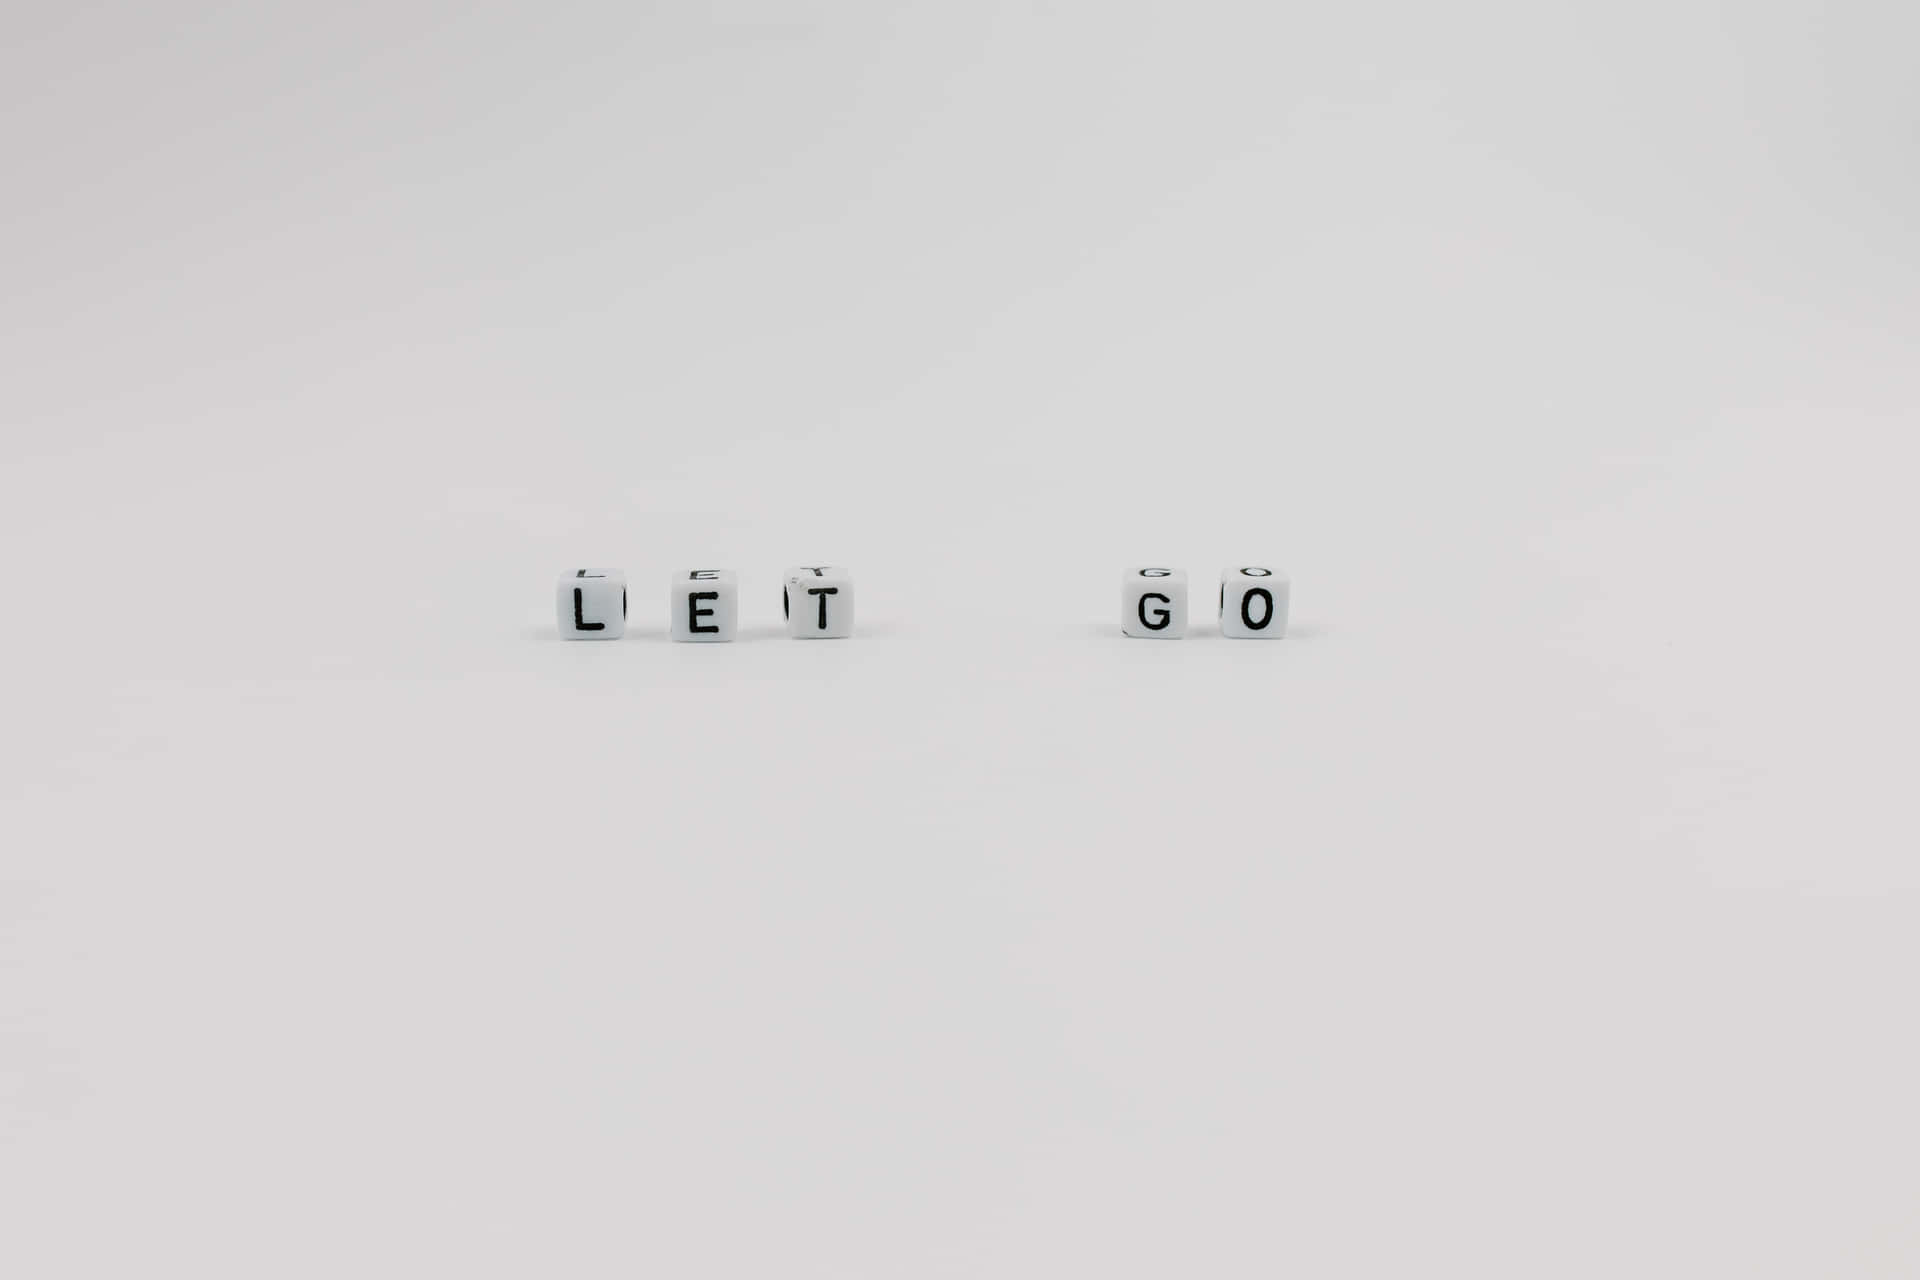 Inspirational Let It Go Blocks Message Background